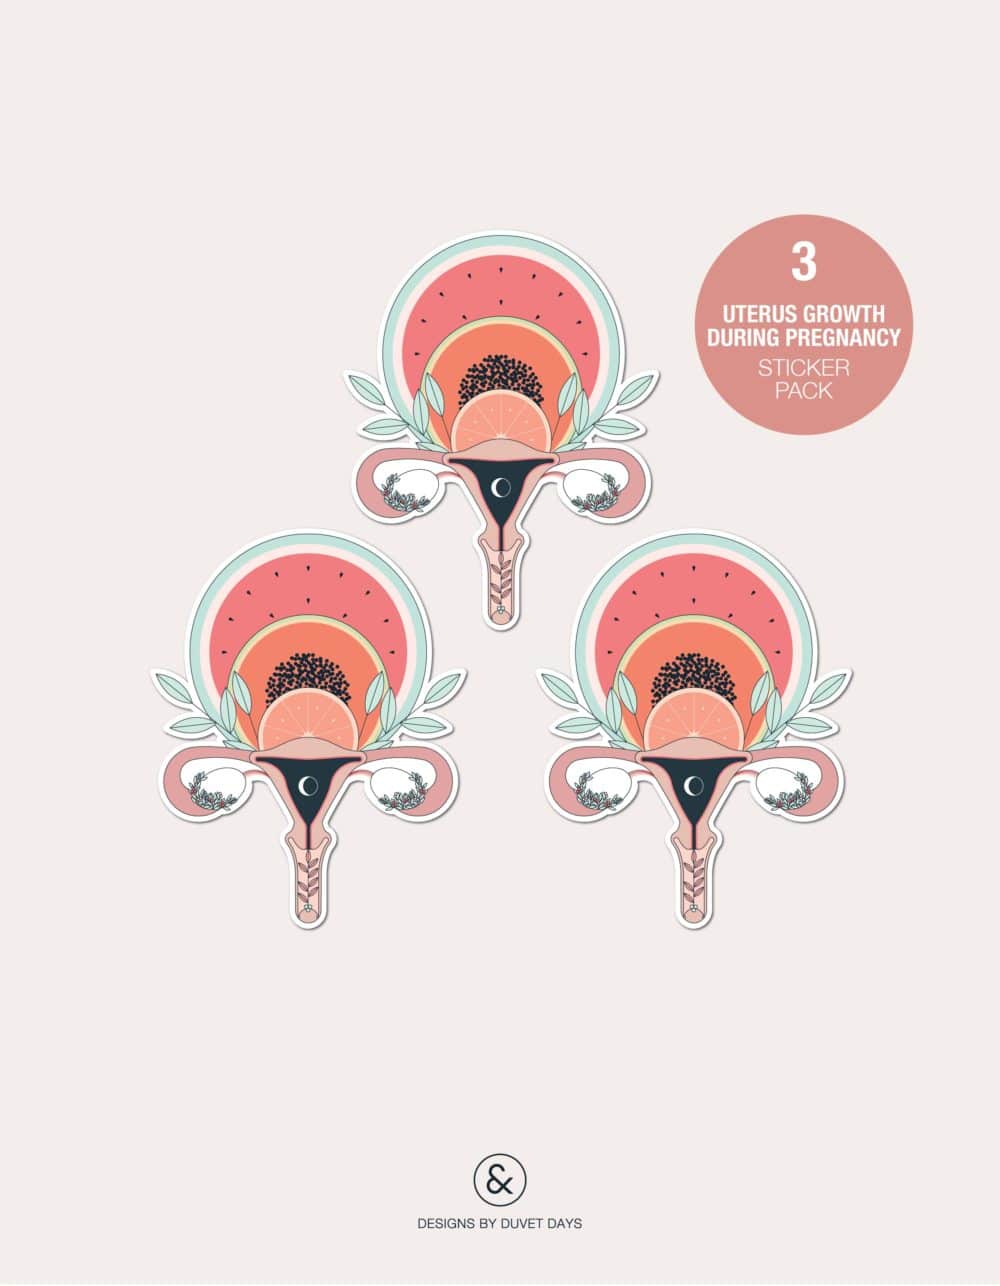 Designs By Duvet Days_Stickers_Uterus Growth During Pregnancy